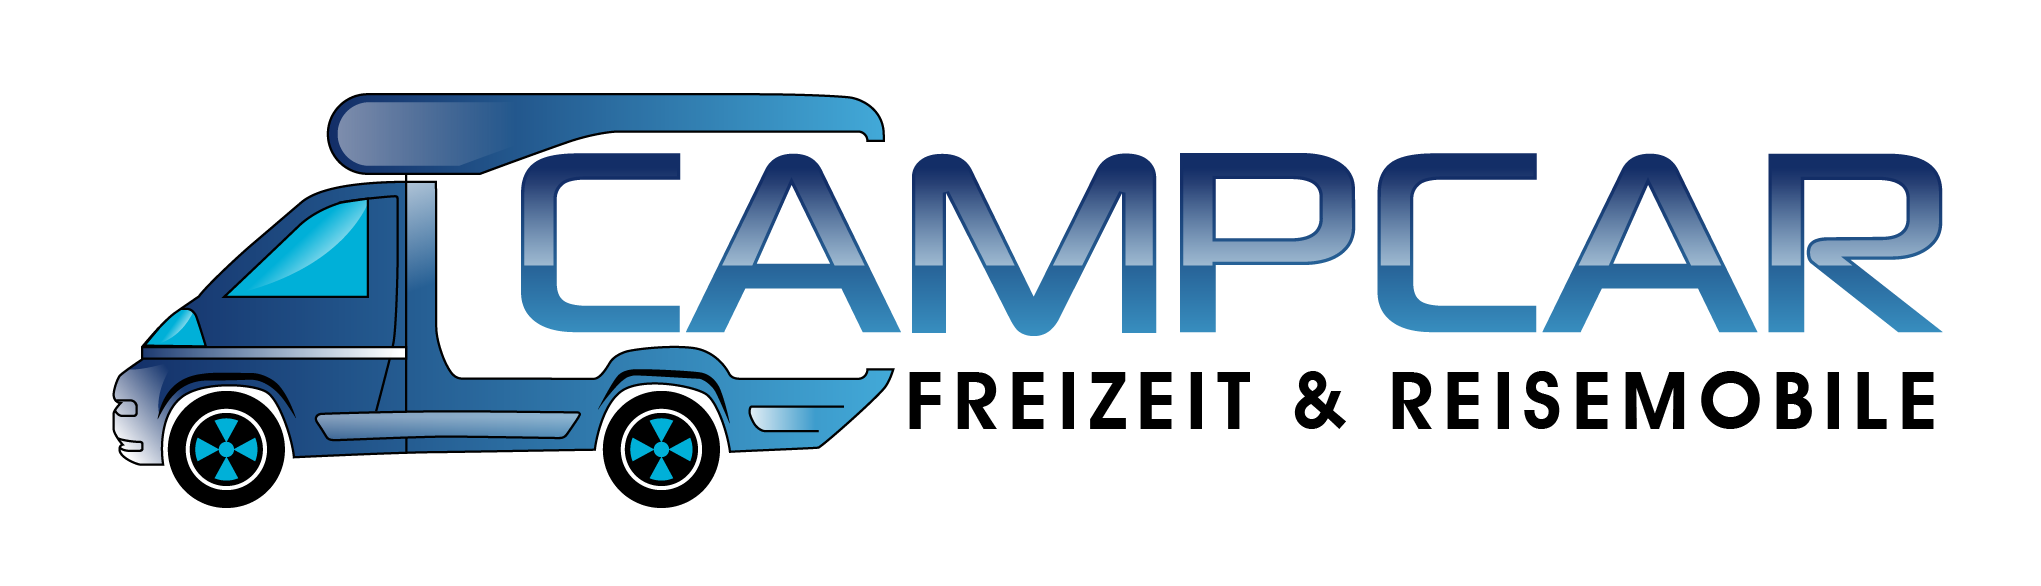 Campcar Freizeit & Reisemobile Logo